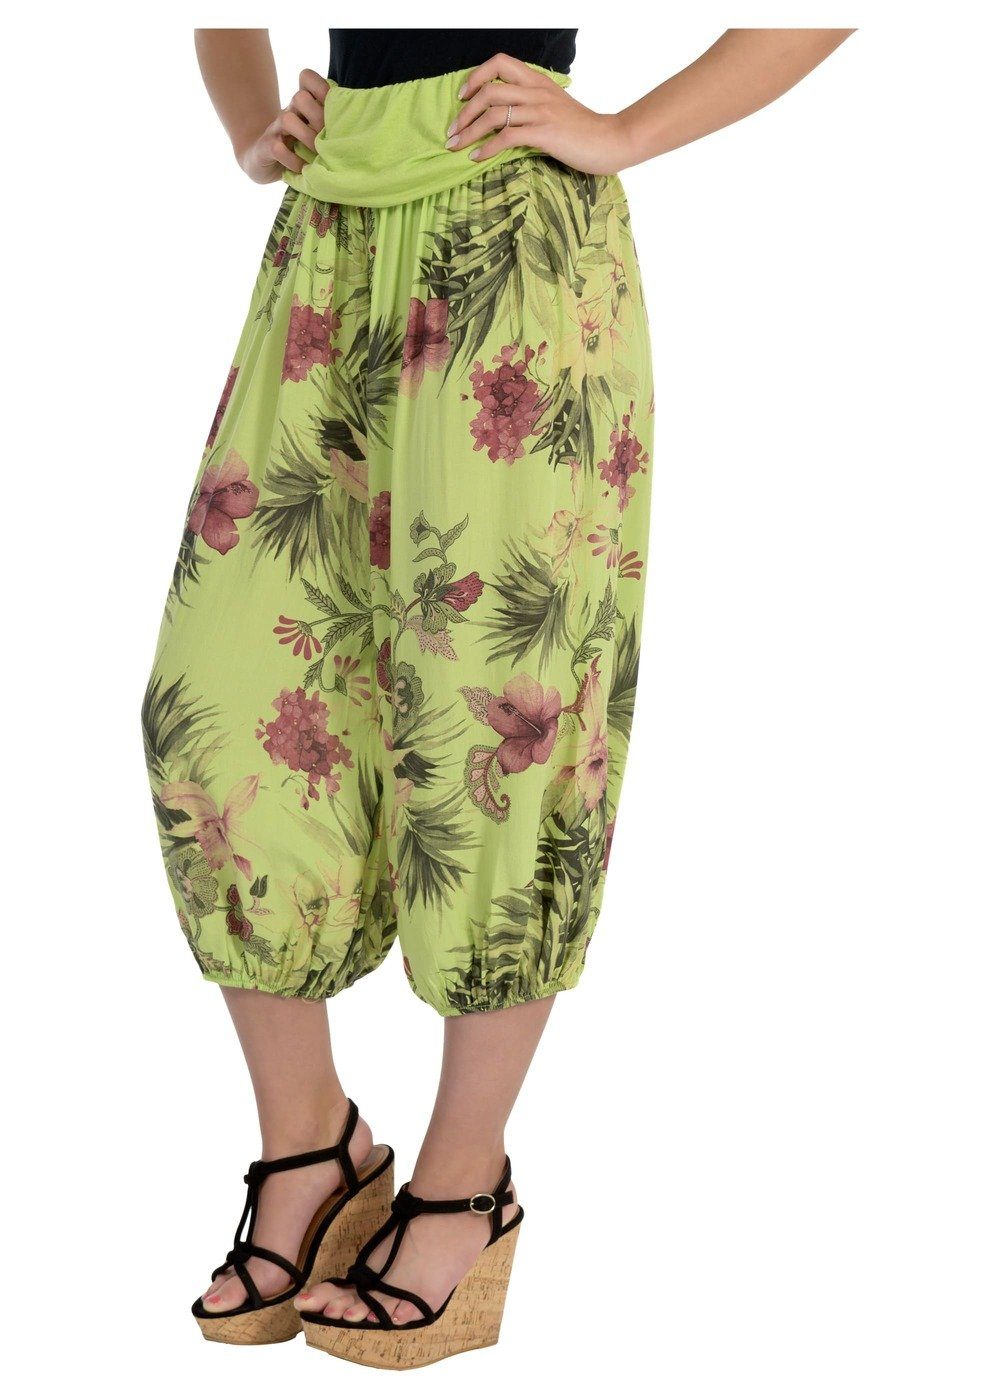 hellgrün Muster Haremshose mit floralem Aladinhose fashion Einheitsgröße more 8938 malito than